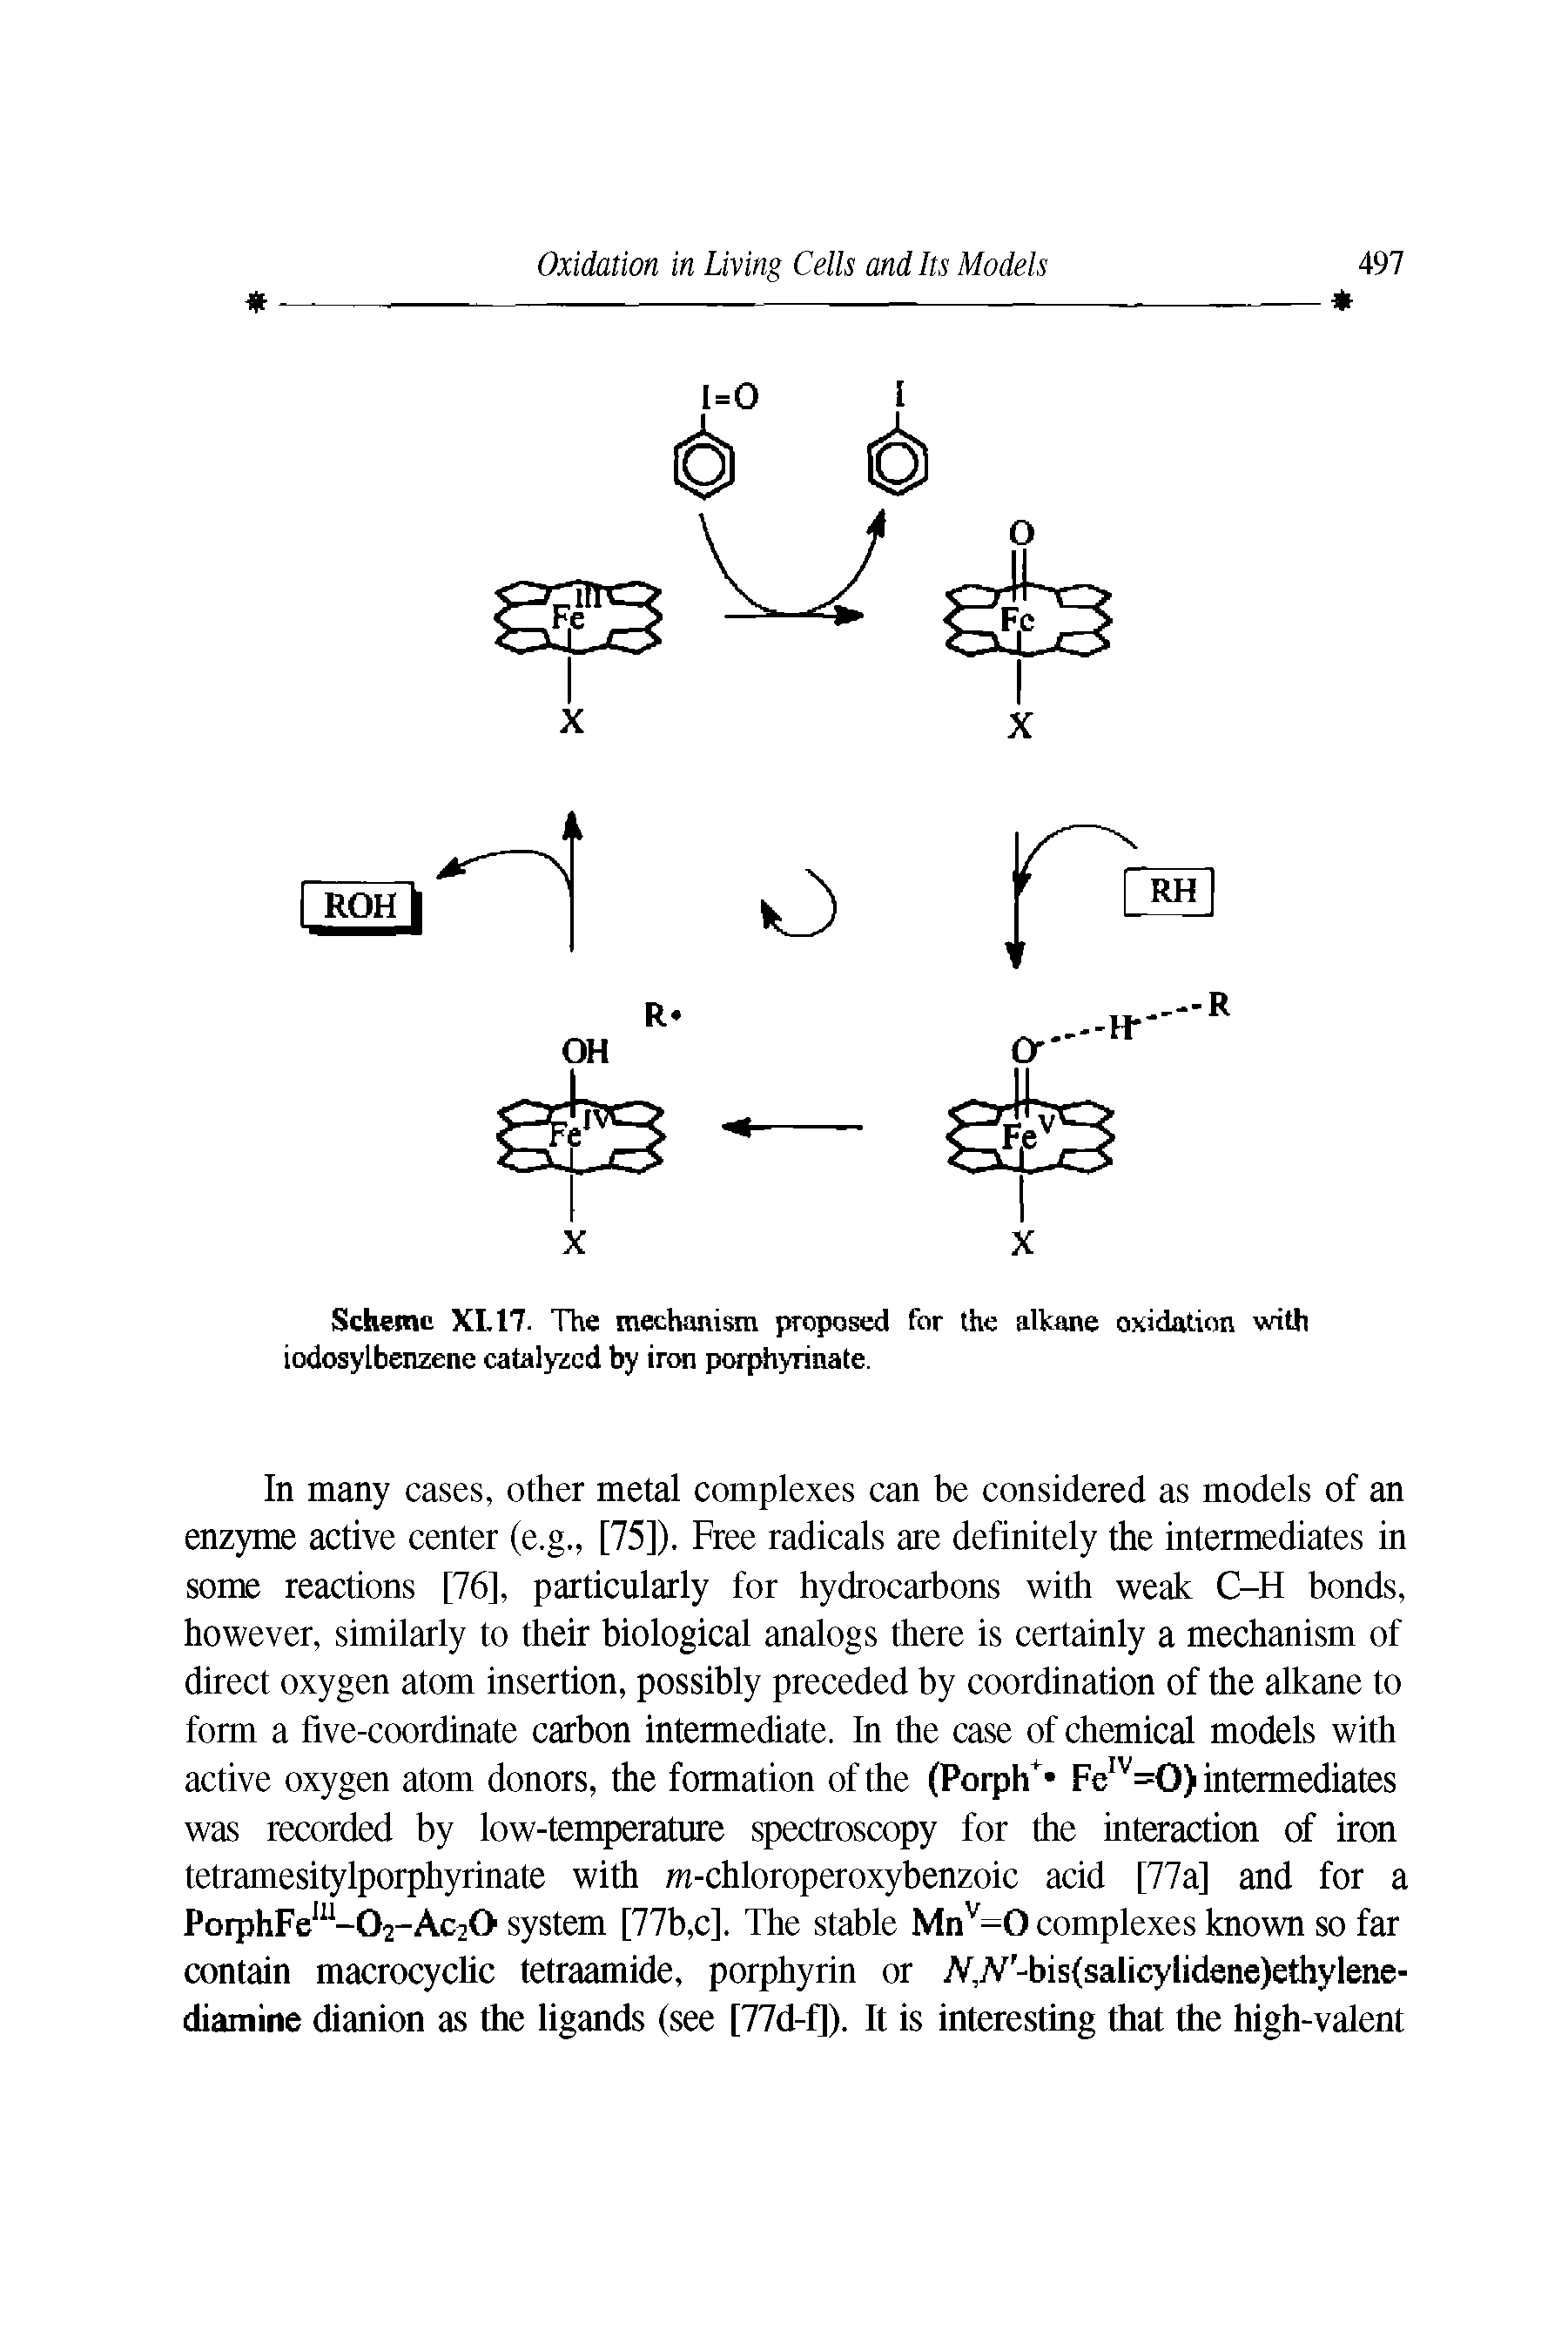 Scheme XL 17. The mechanism proposed for the alkane oxidation with iodosylbenzene catalyzed by iron porphyrinate.